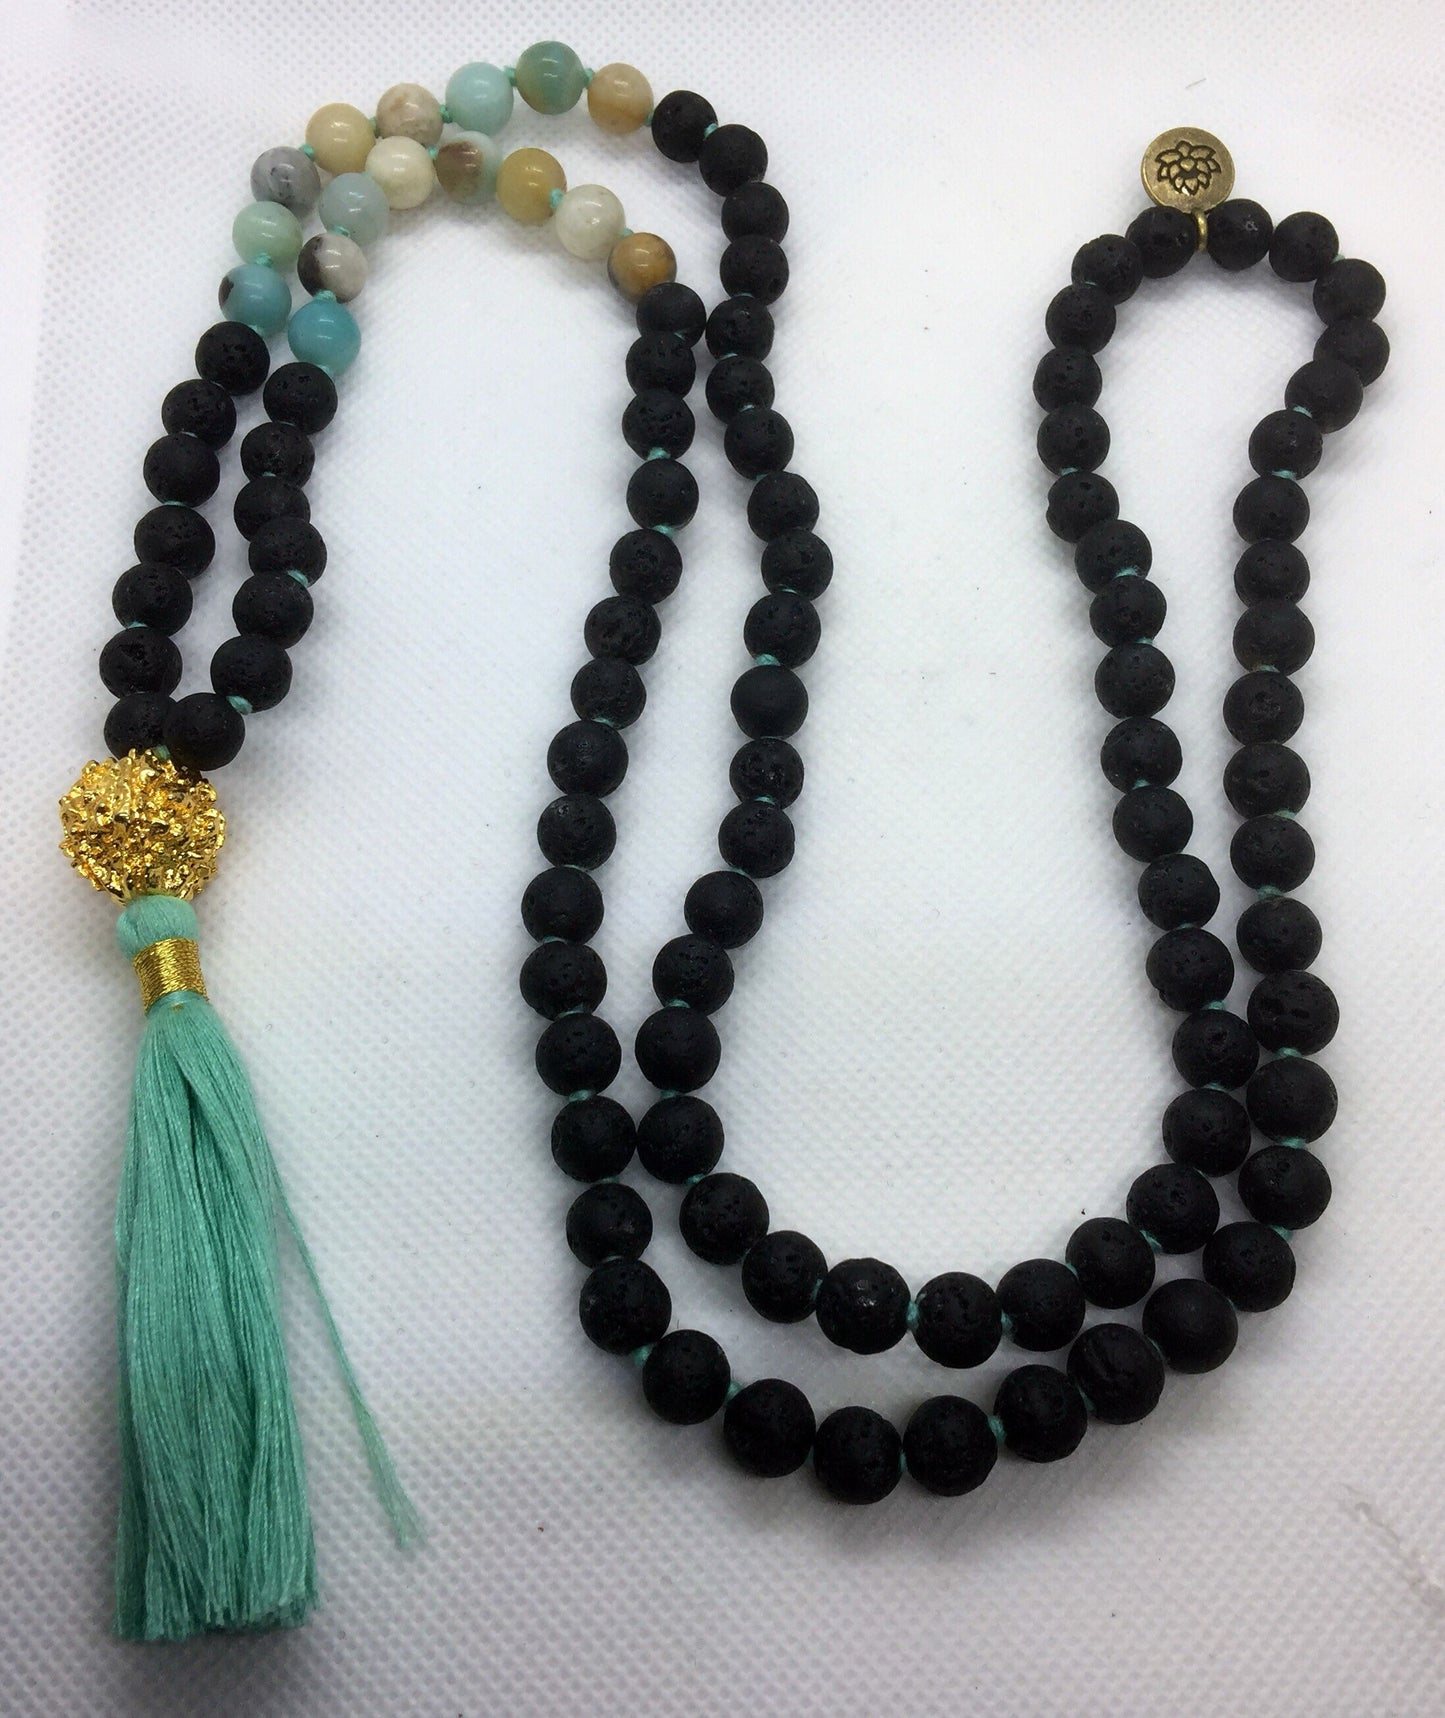 Amazonite lava stone mala - 108 beads hand knotted mala- turquoise long tassel - Golden Brass guru bead with lotus charm necklace mala